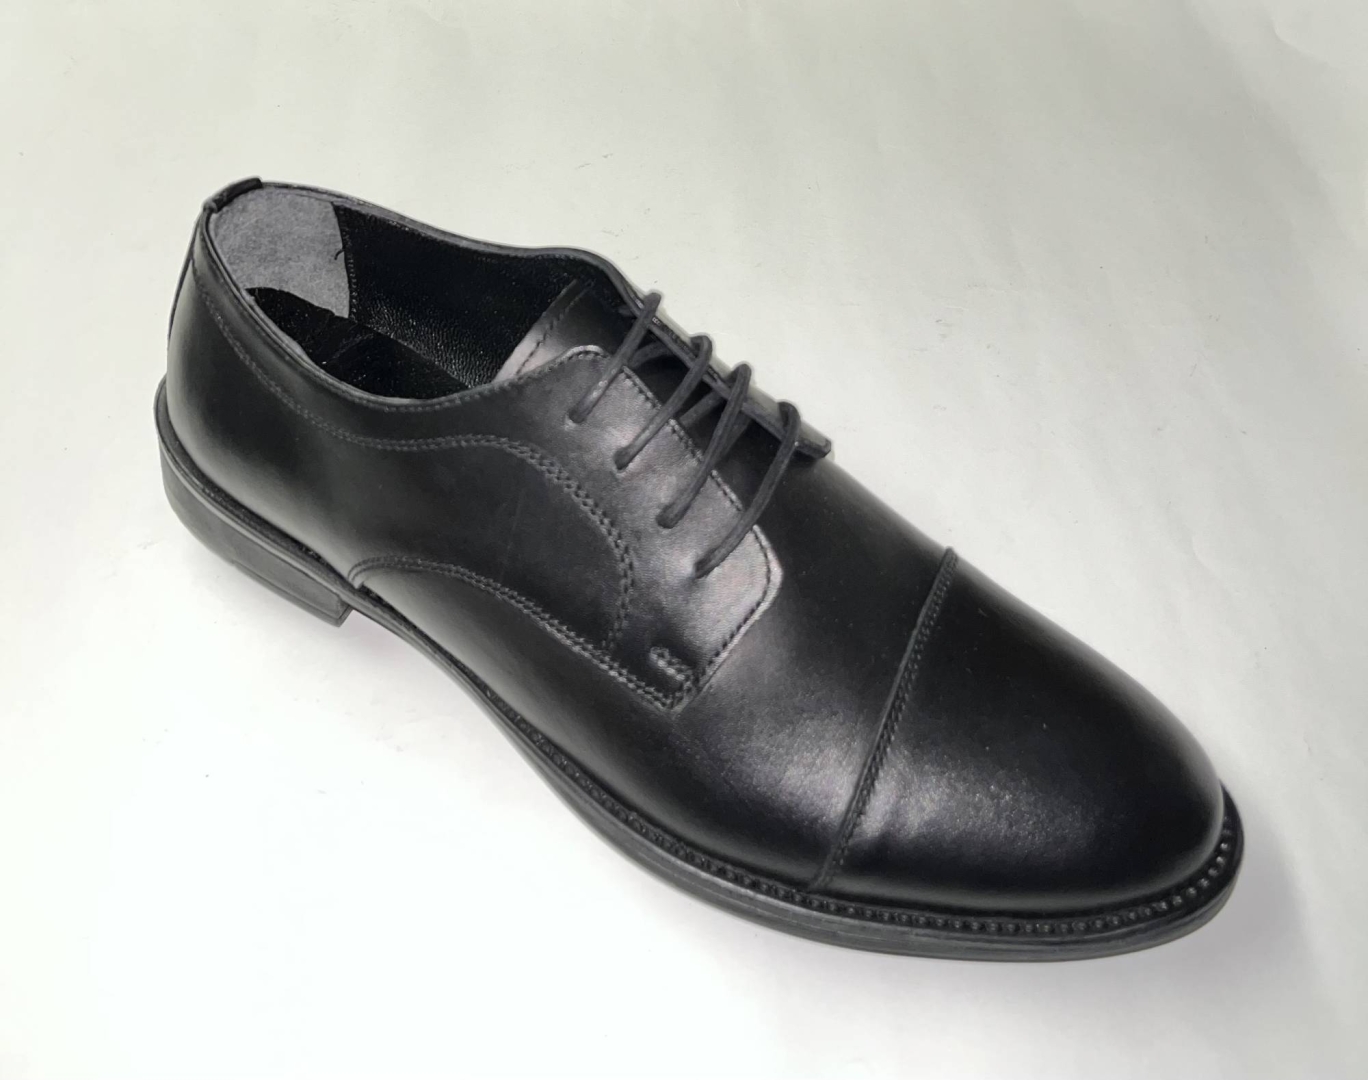 Zapato tipo blucher para hombre en piel negra 1001 de BARHUBER. H-383